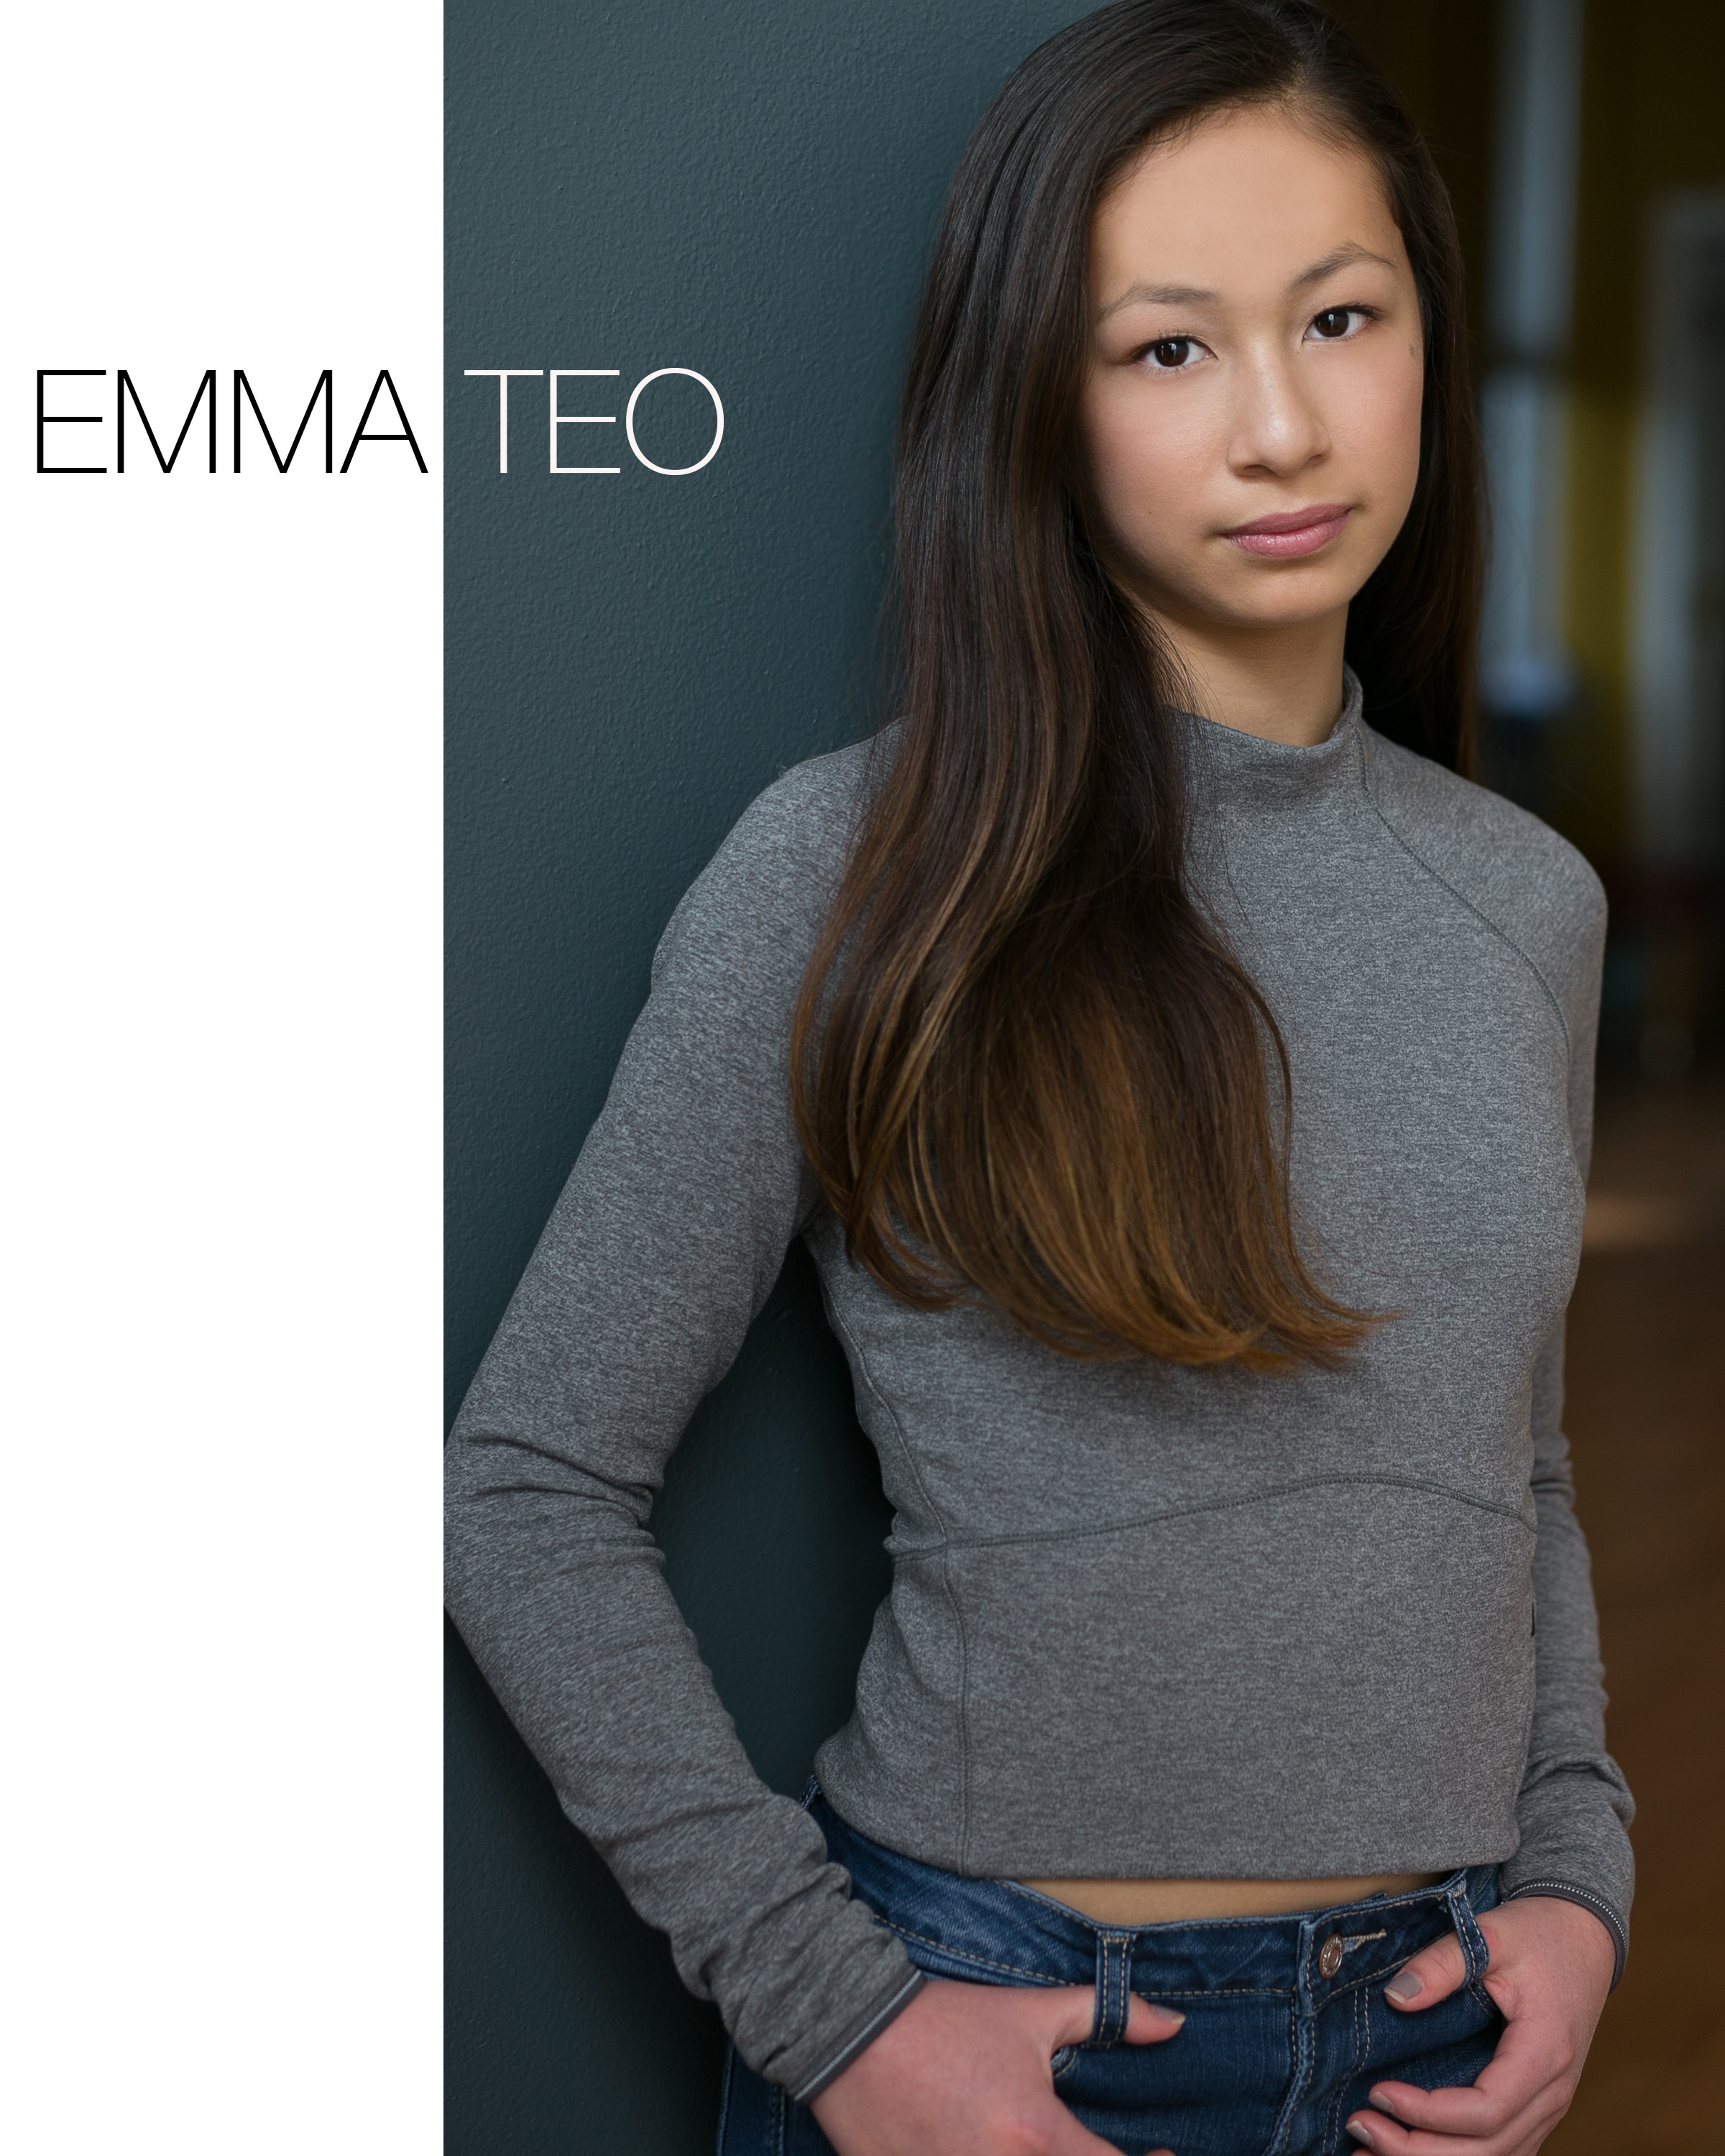 Emma Teo